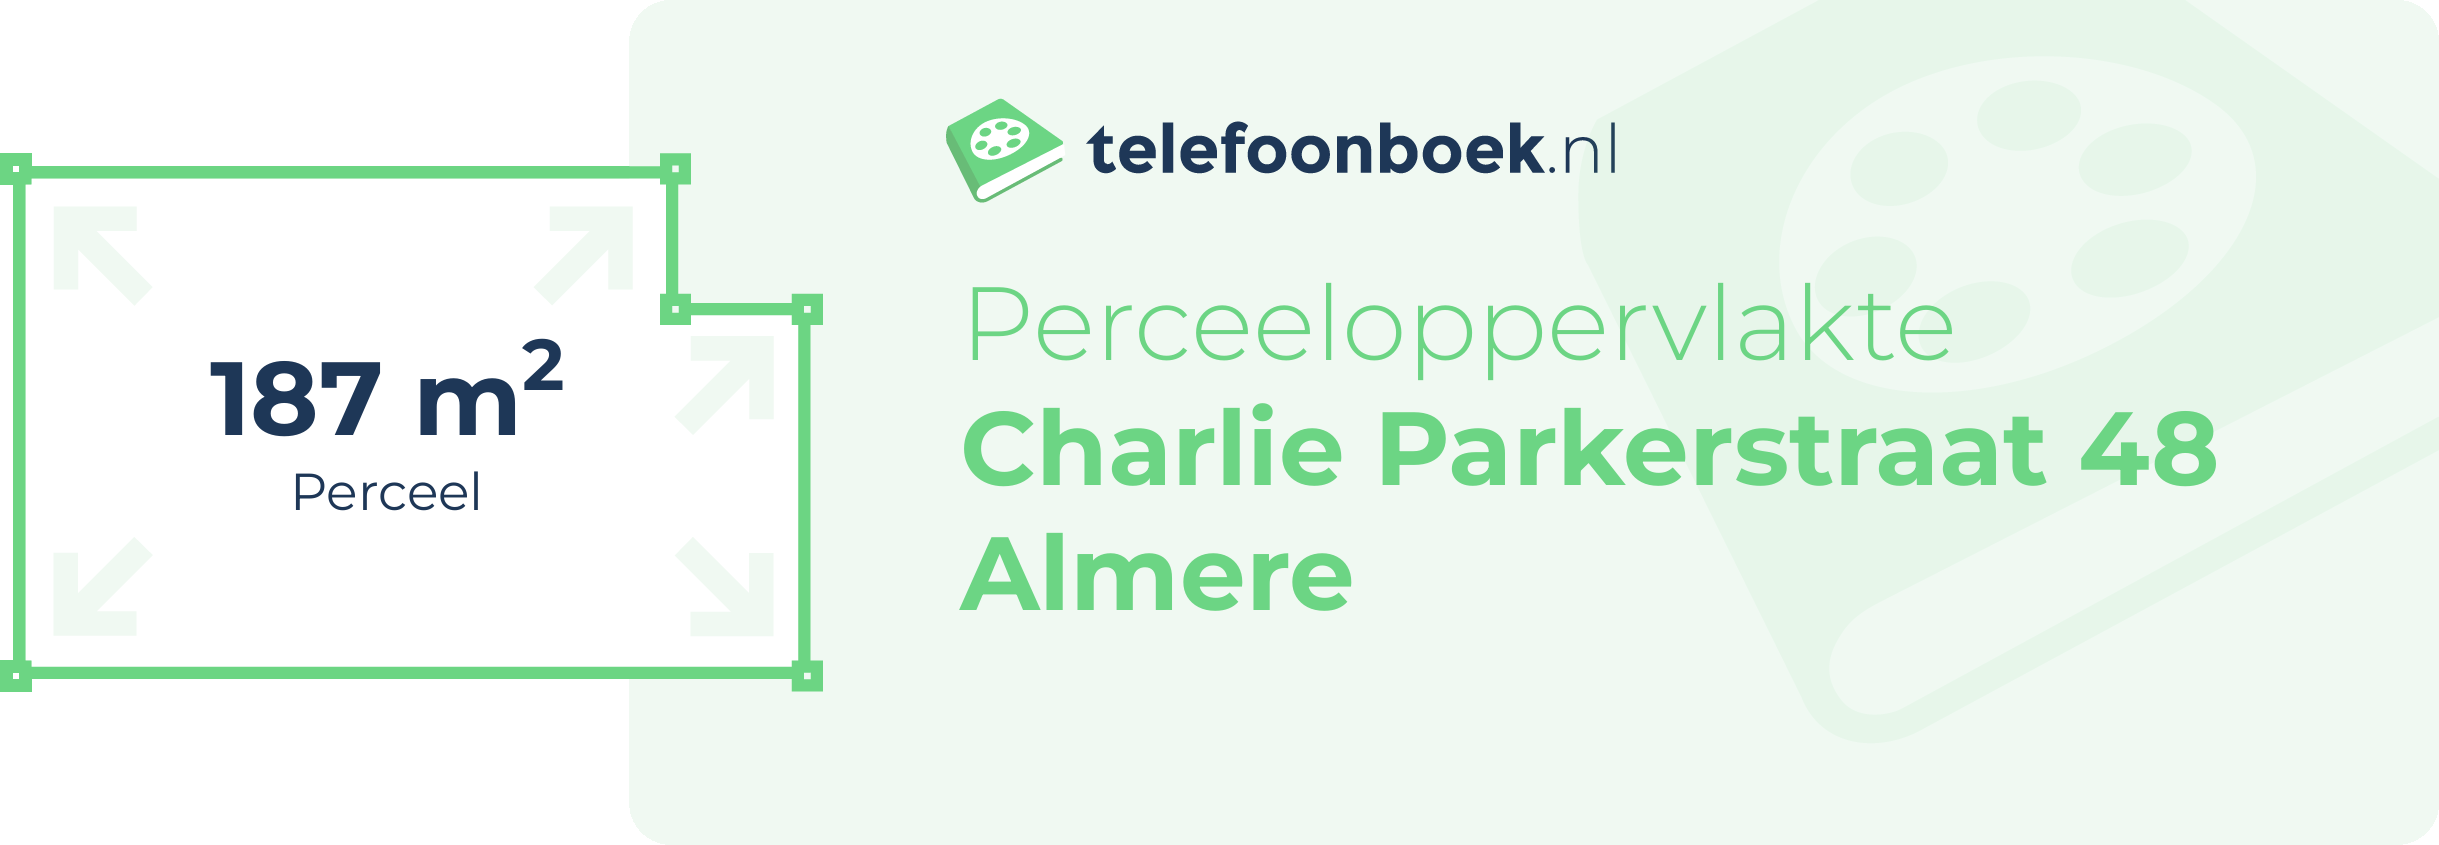 Perceeloppervlakte Charlie Parkerstraat 48 Almere